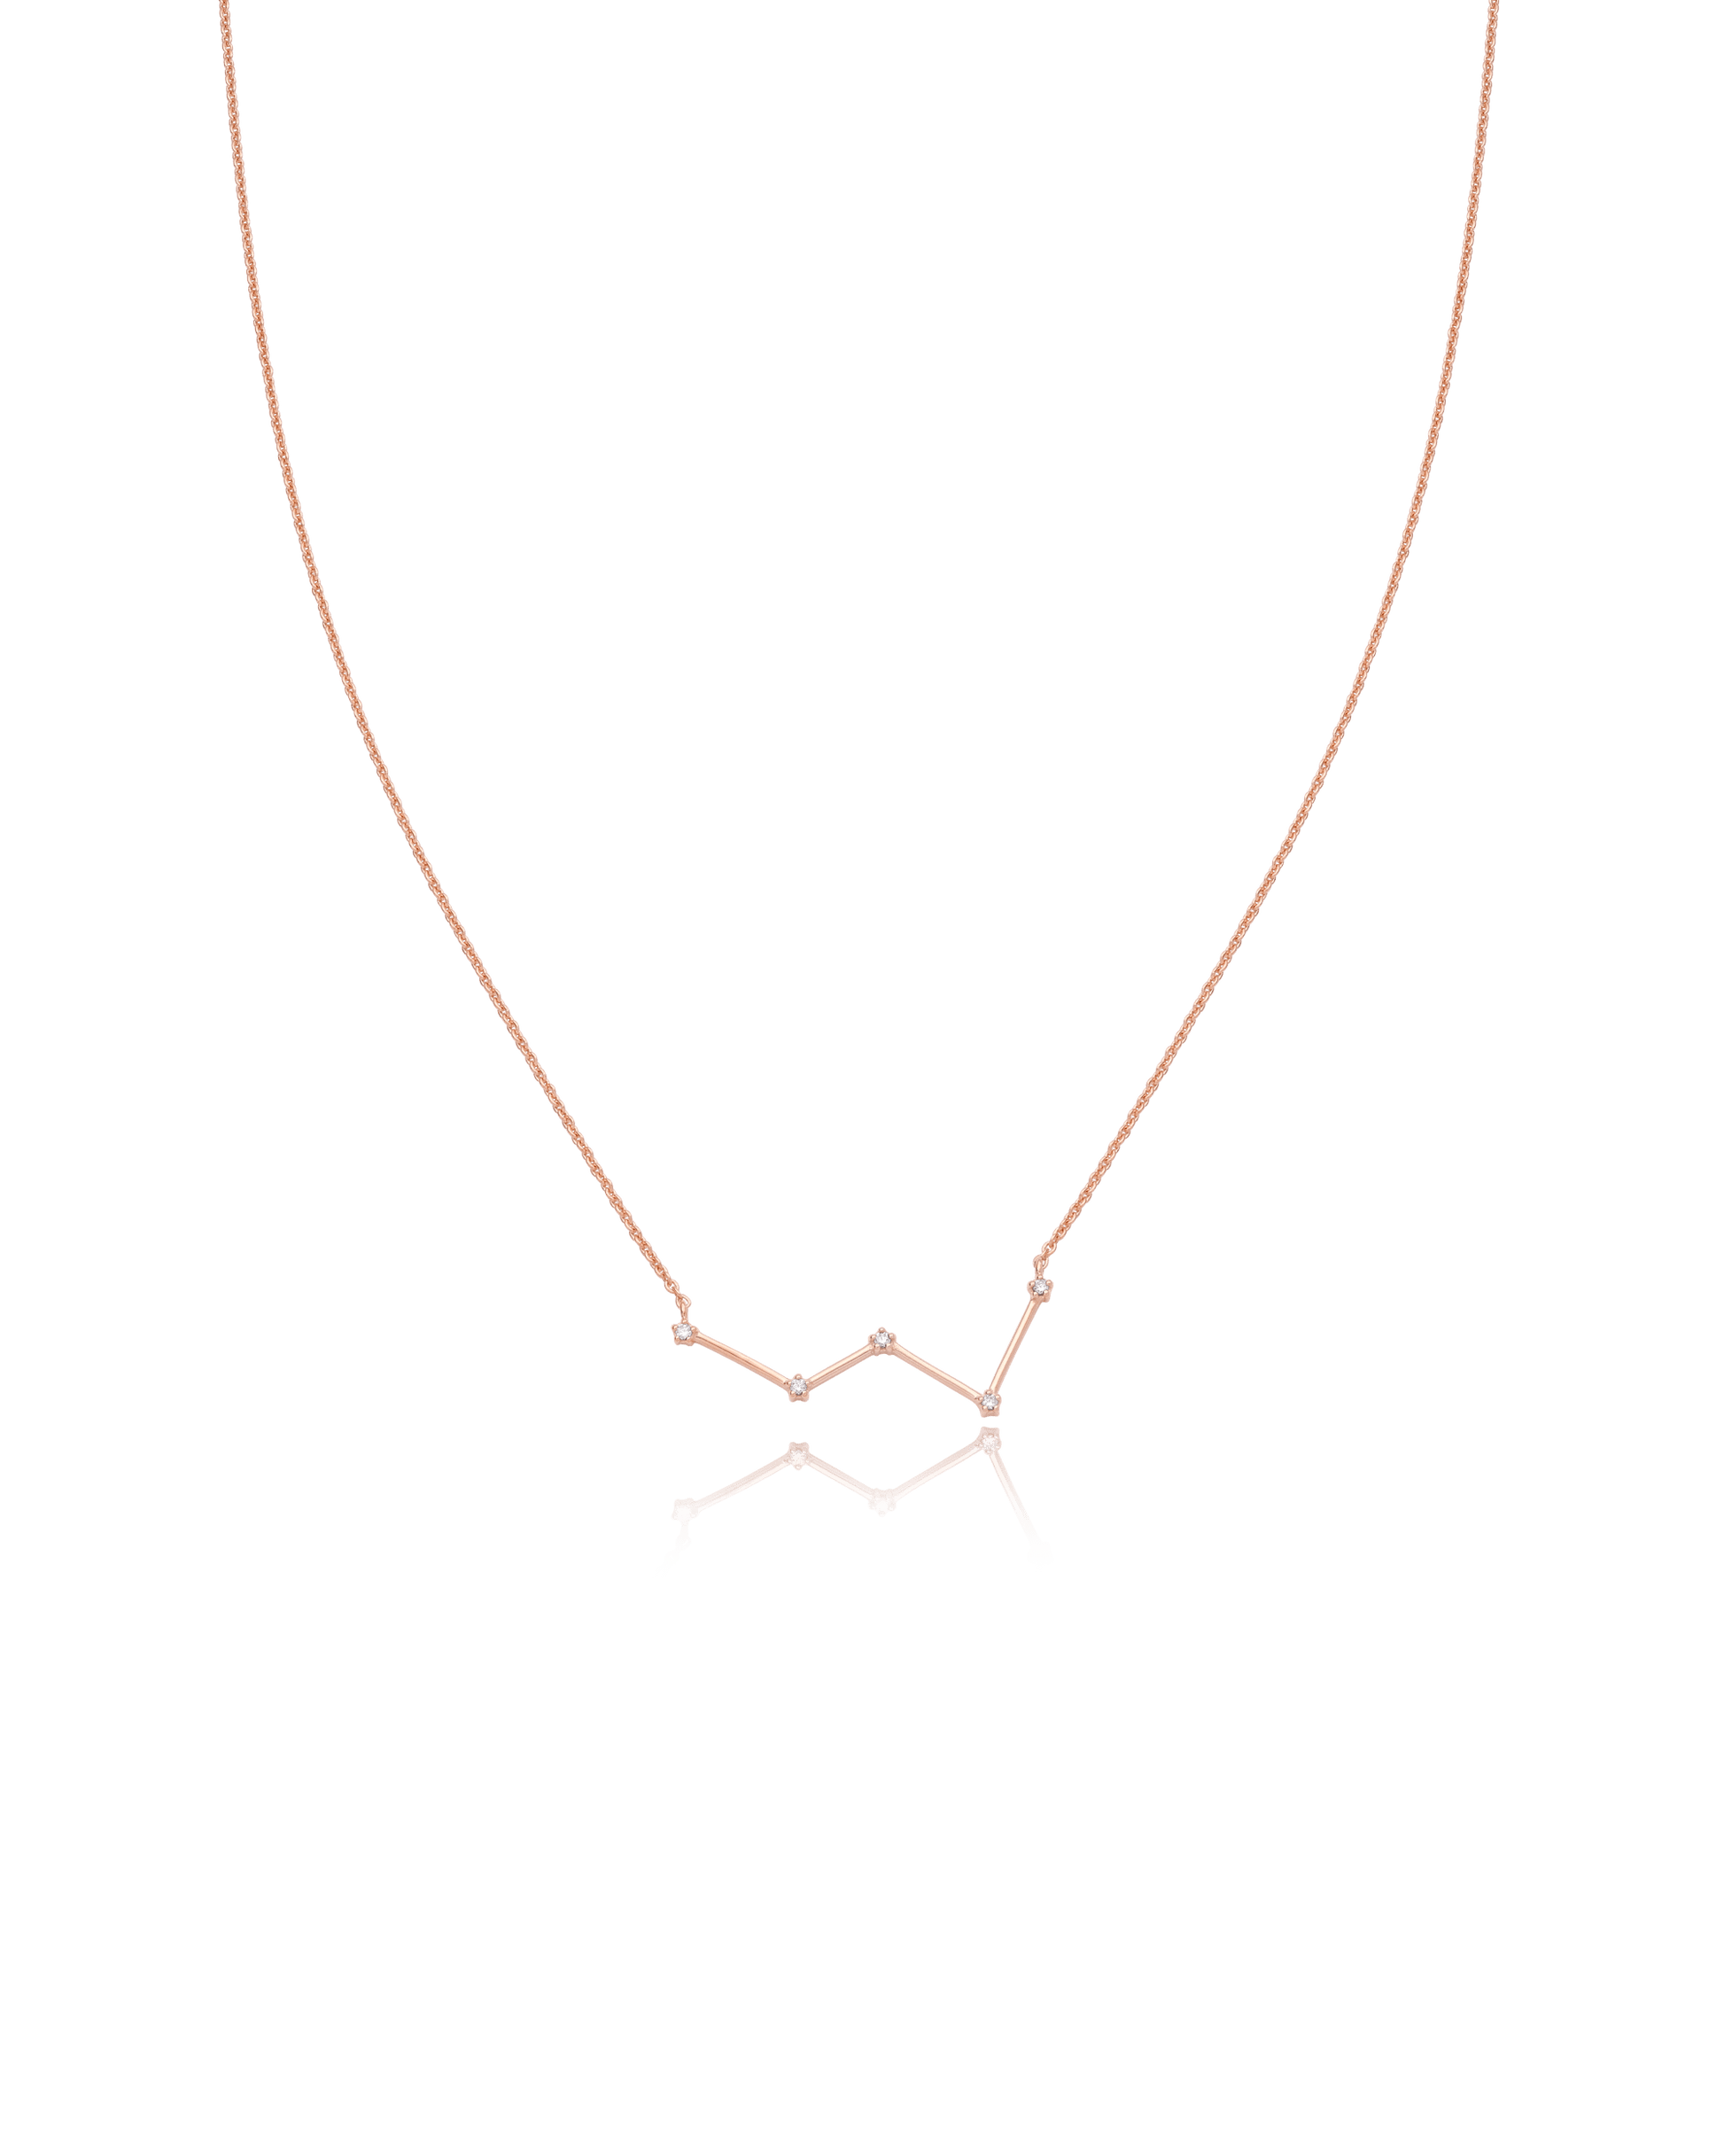 Ursa Major Constellation Necklace - 18K Rose Vermeil Necklaces magal-dev Cassiopeia 16" 